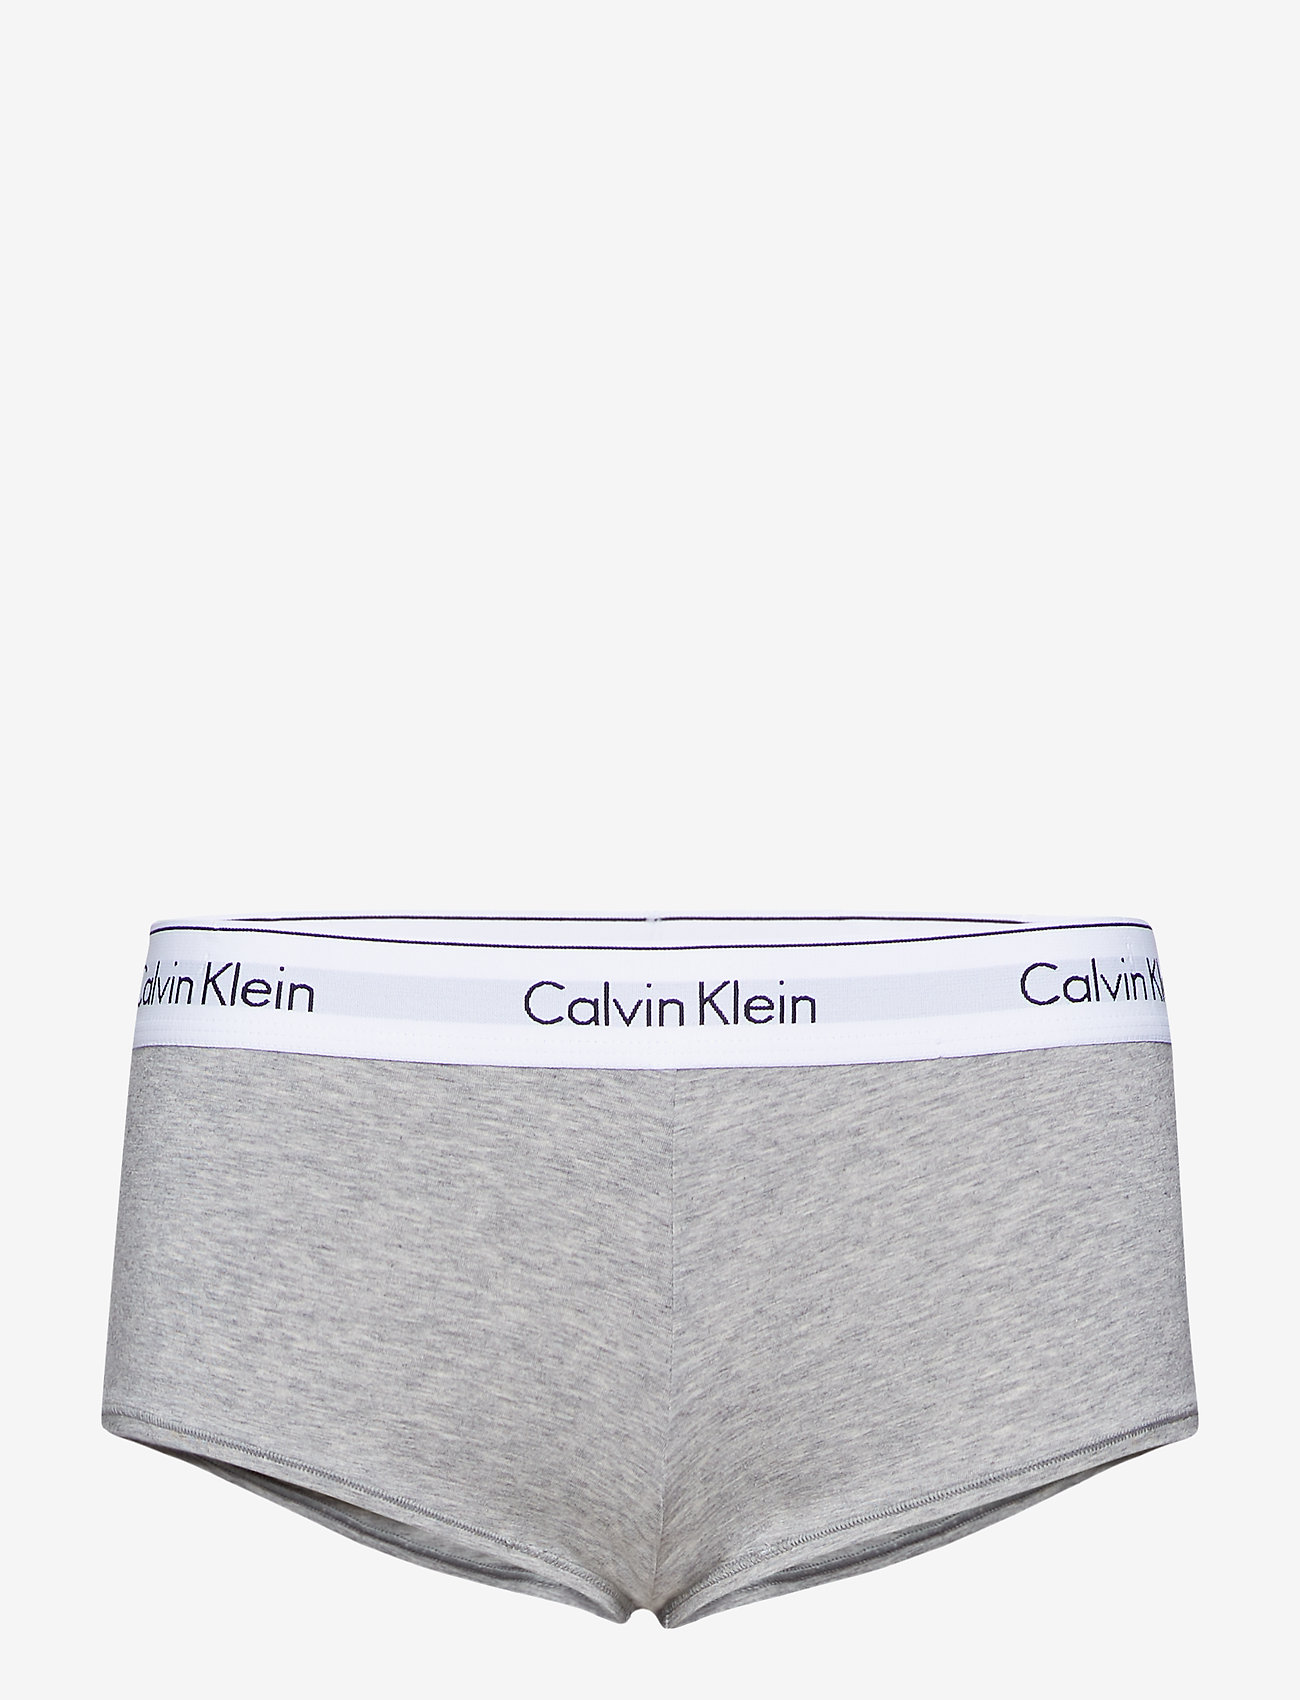 Calvin Klein - BOYSHORT - hipsters & hotpants - grey heather - 1